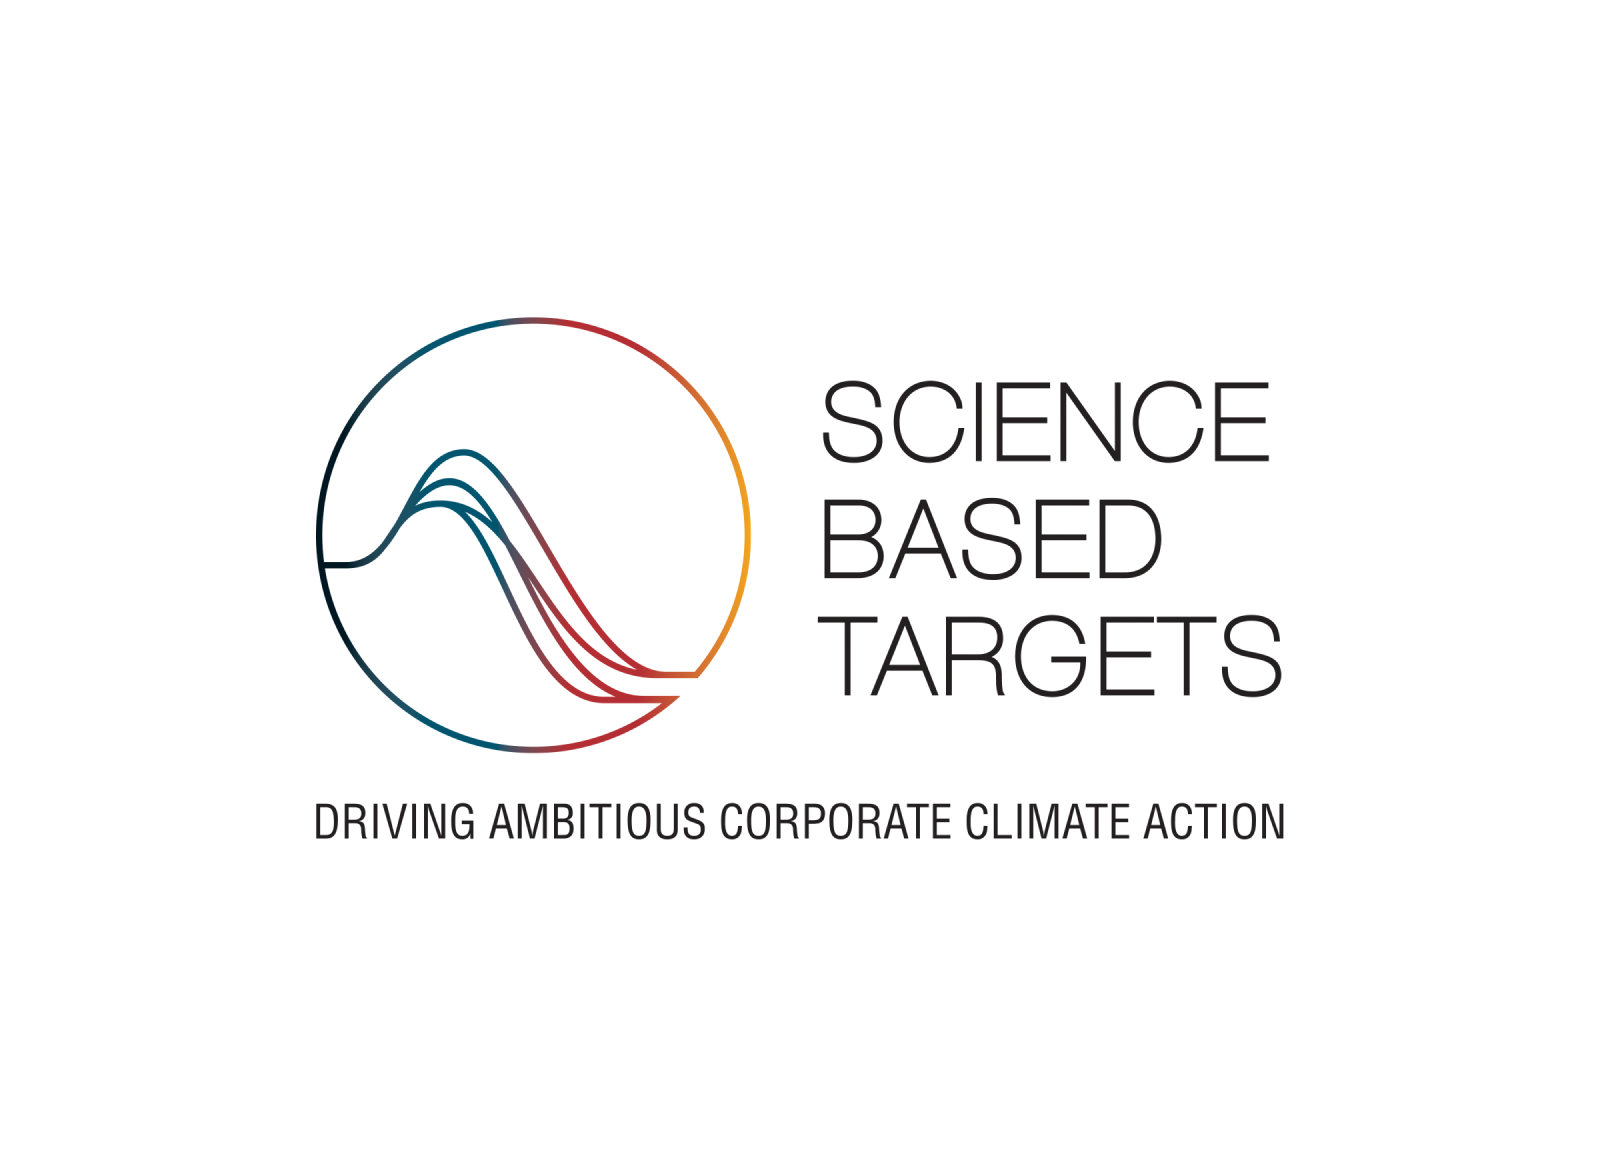 engcon ansluter sig till Science Based Targets initiative